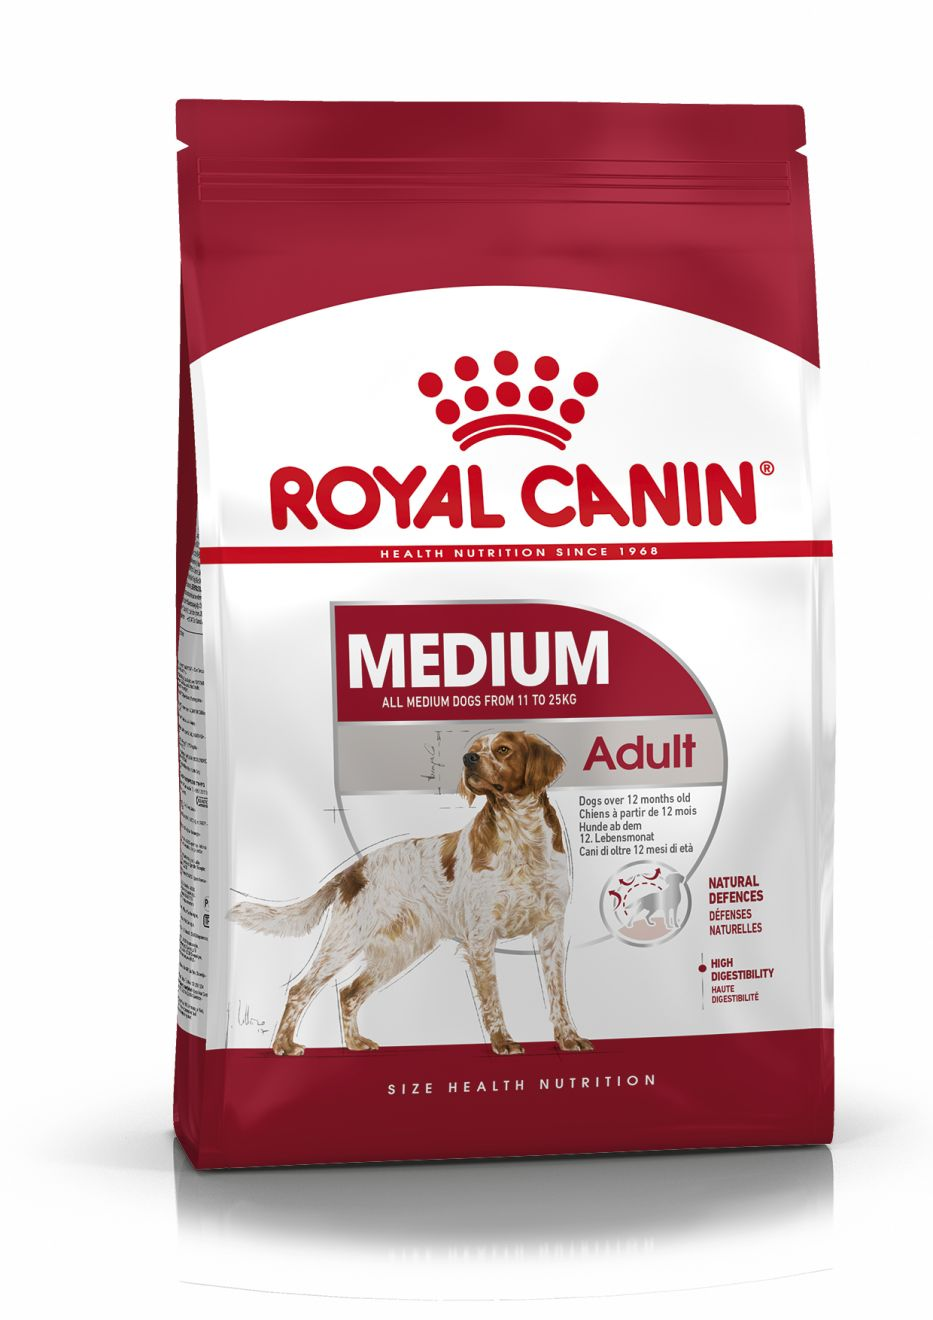 royal canin maxi light 15kg